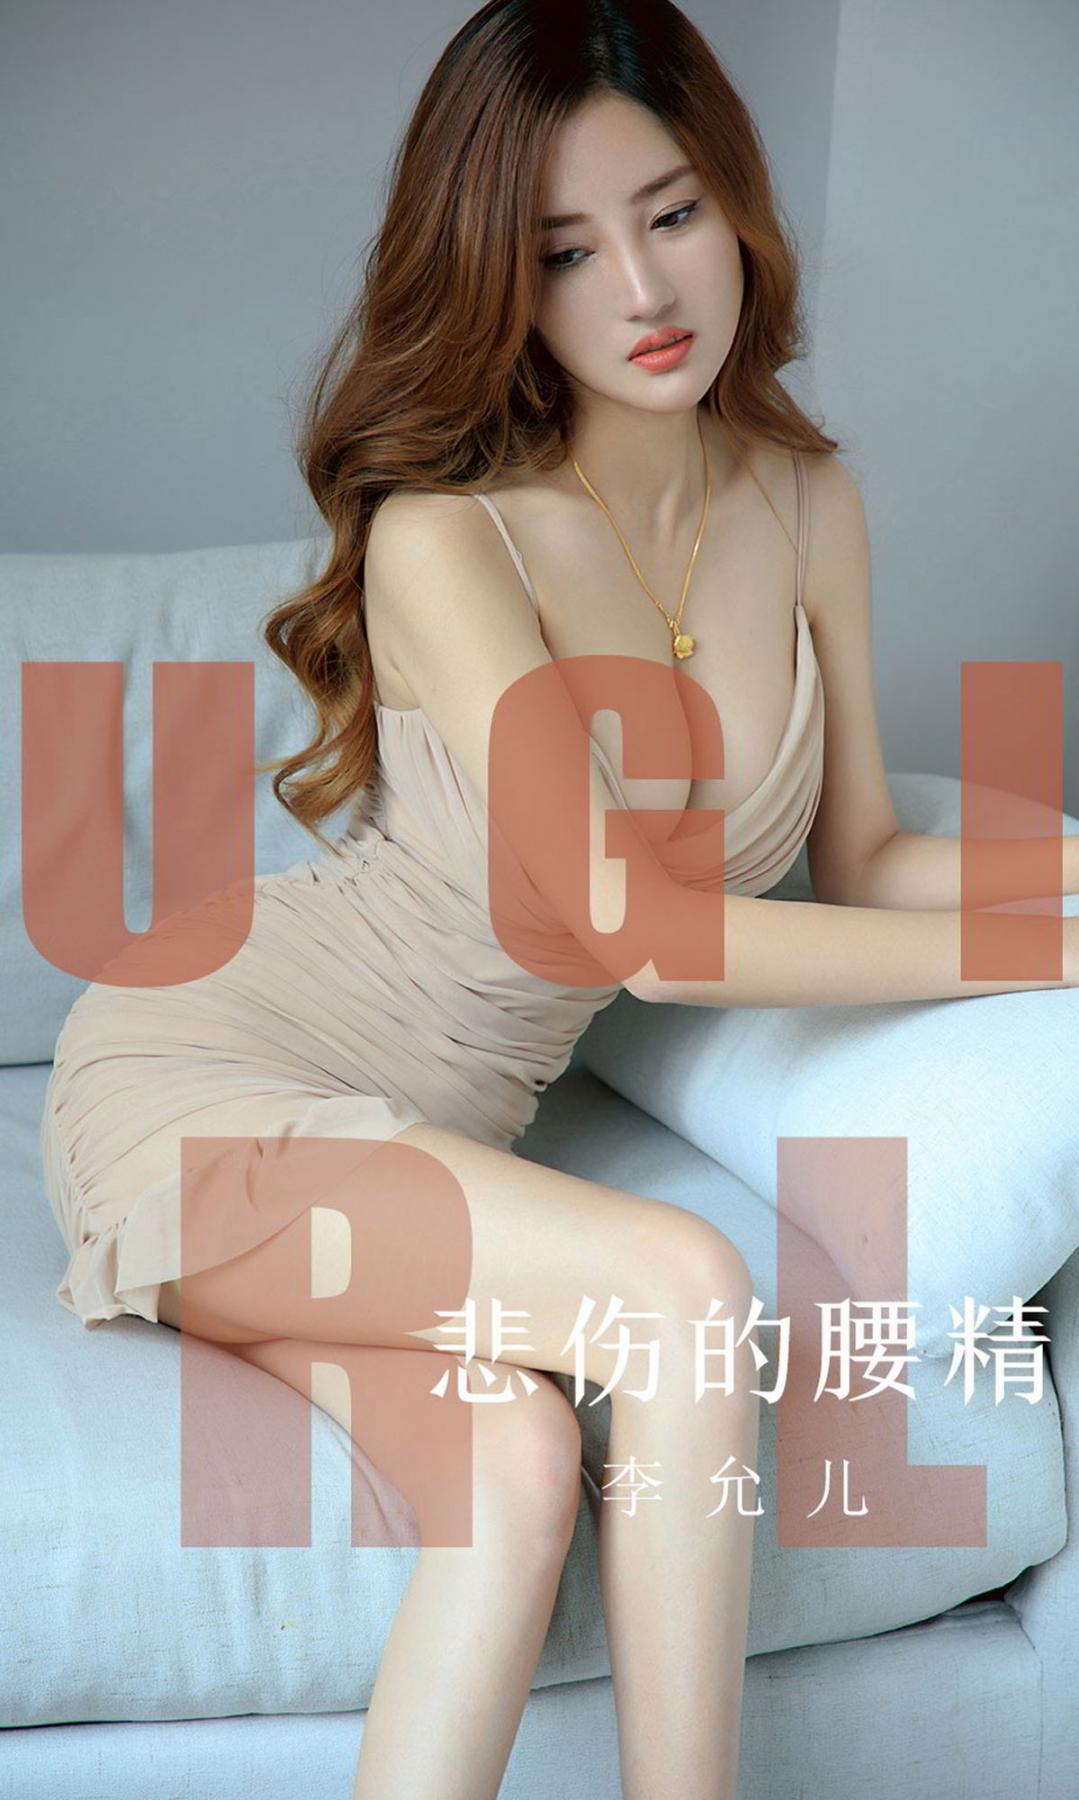 Ugirls App Vol. 1542 Li Yun Er